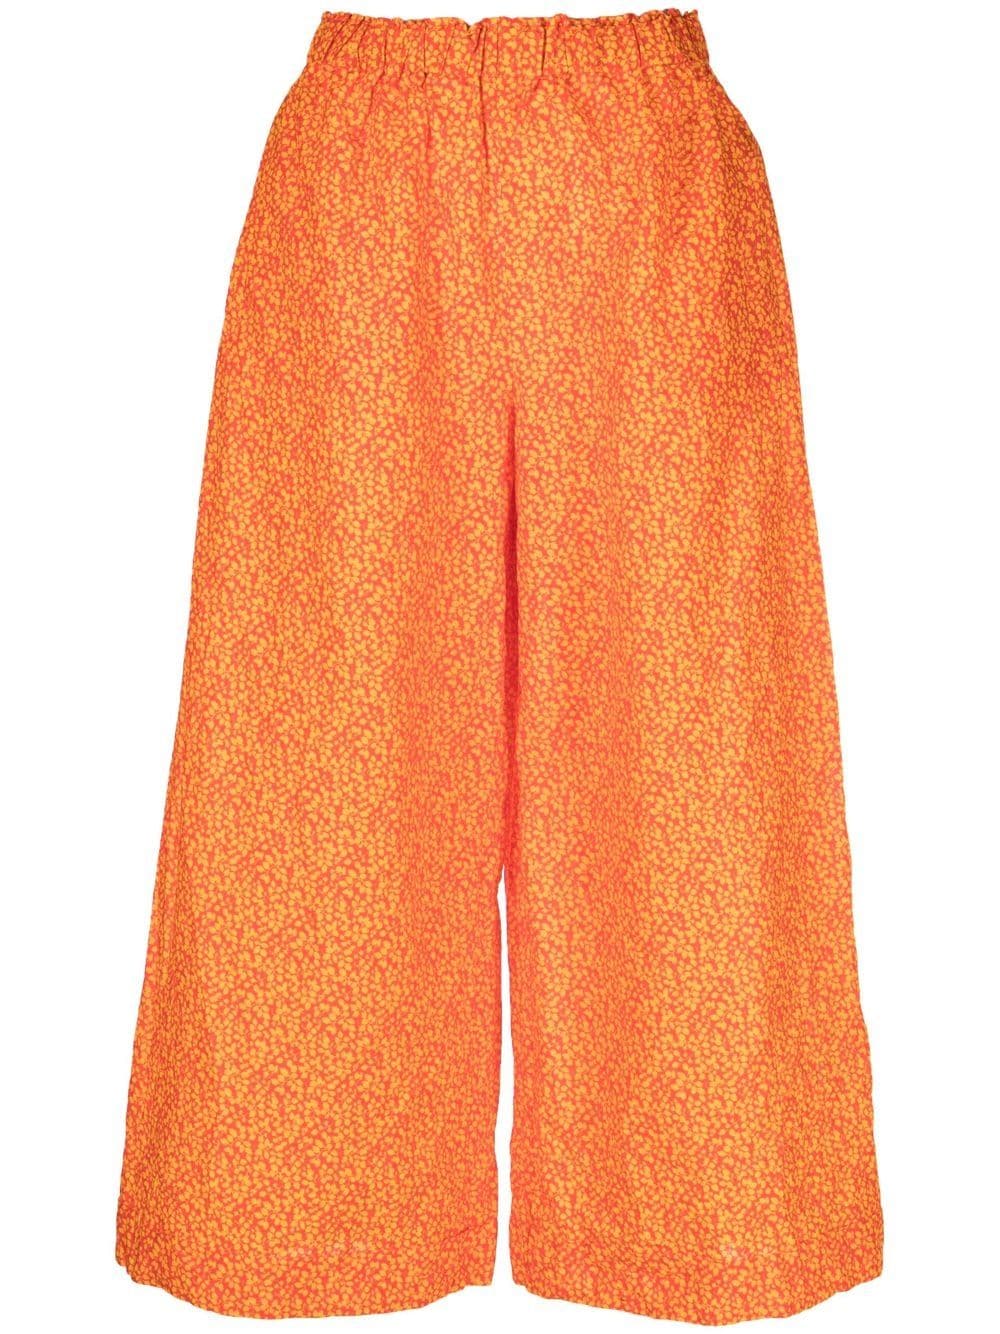 daniela gregis floral-print wide-leg trousers - orange